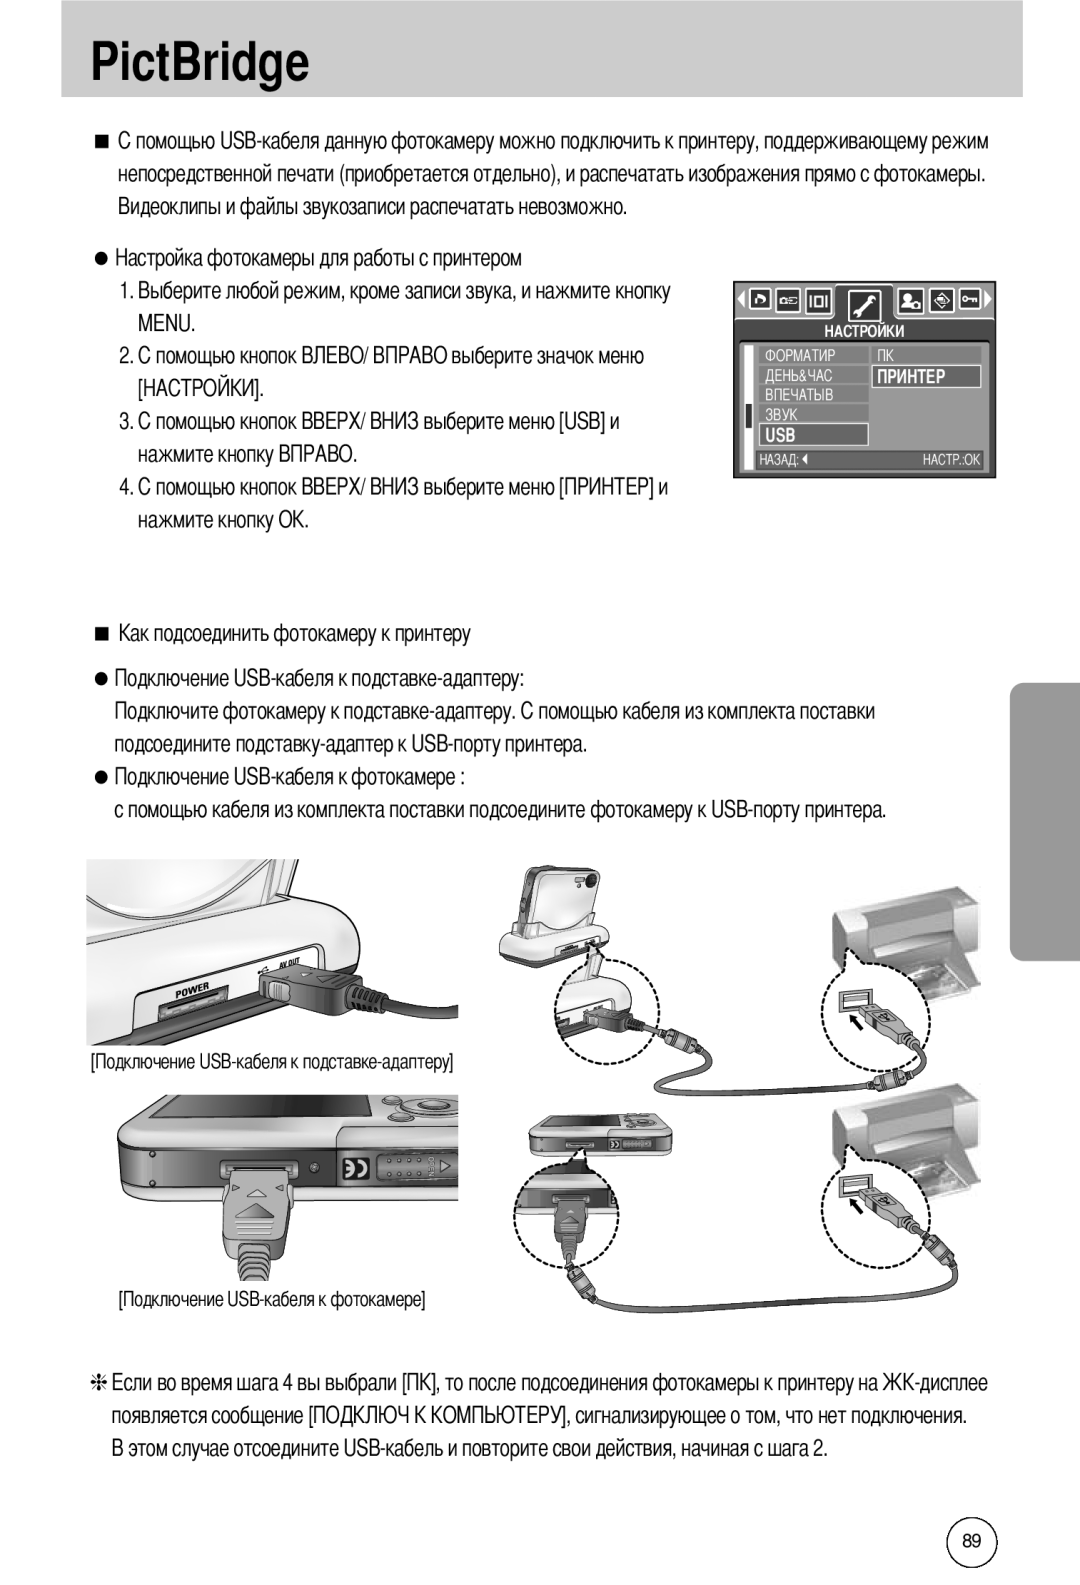 Samsung EC-I50ZZBBB/DE manual PictBridge, Menu, нажмите кнопку OK, подсоедините подставку-адаптер к USB-порту принтера 